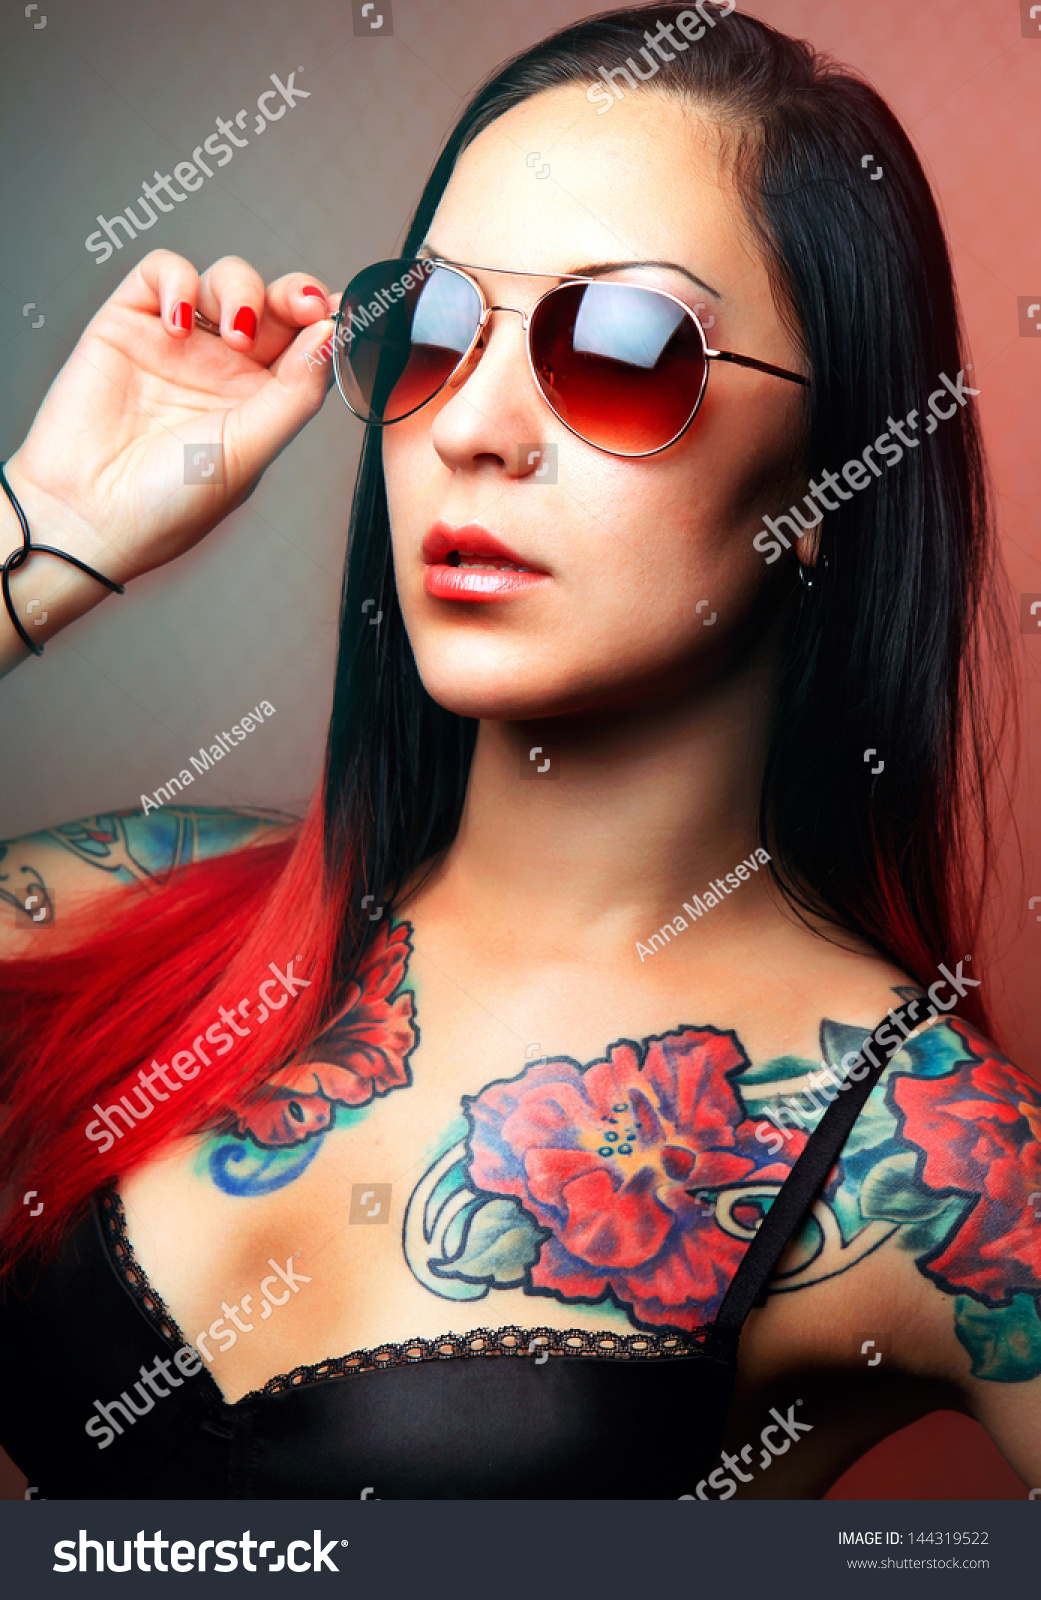 beautiful girl with tattoos